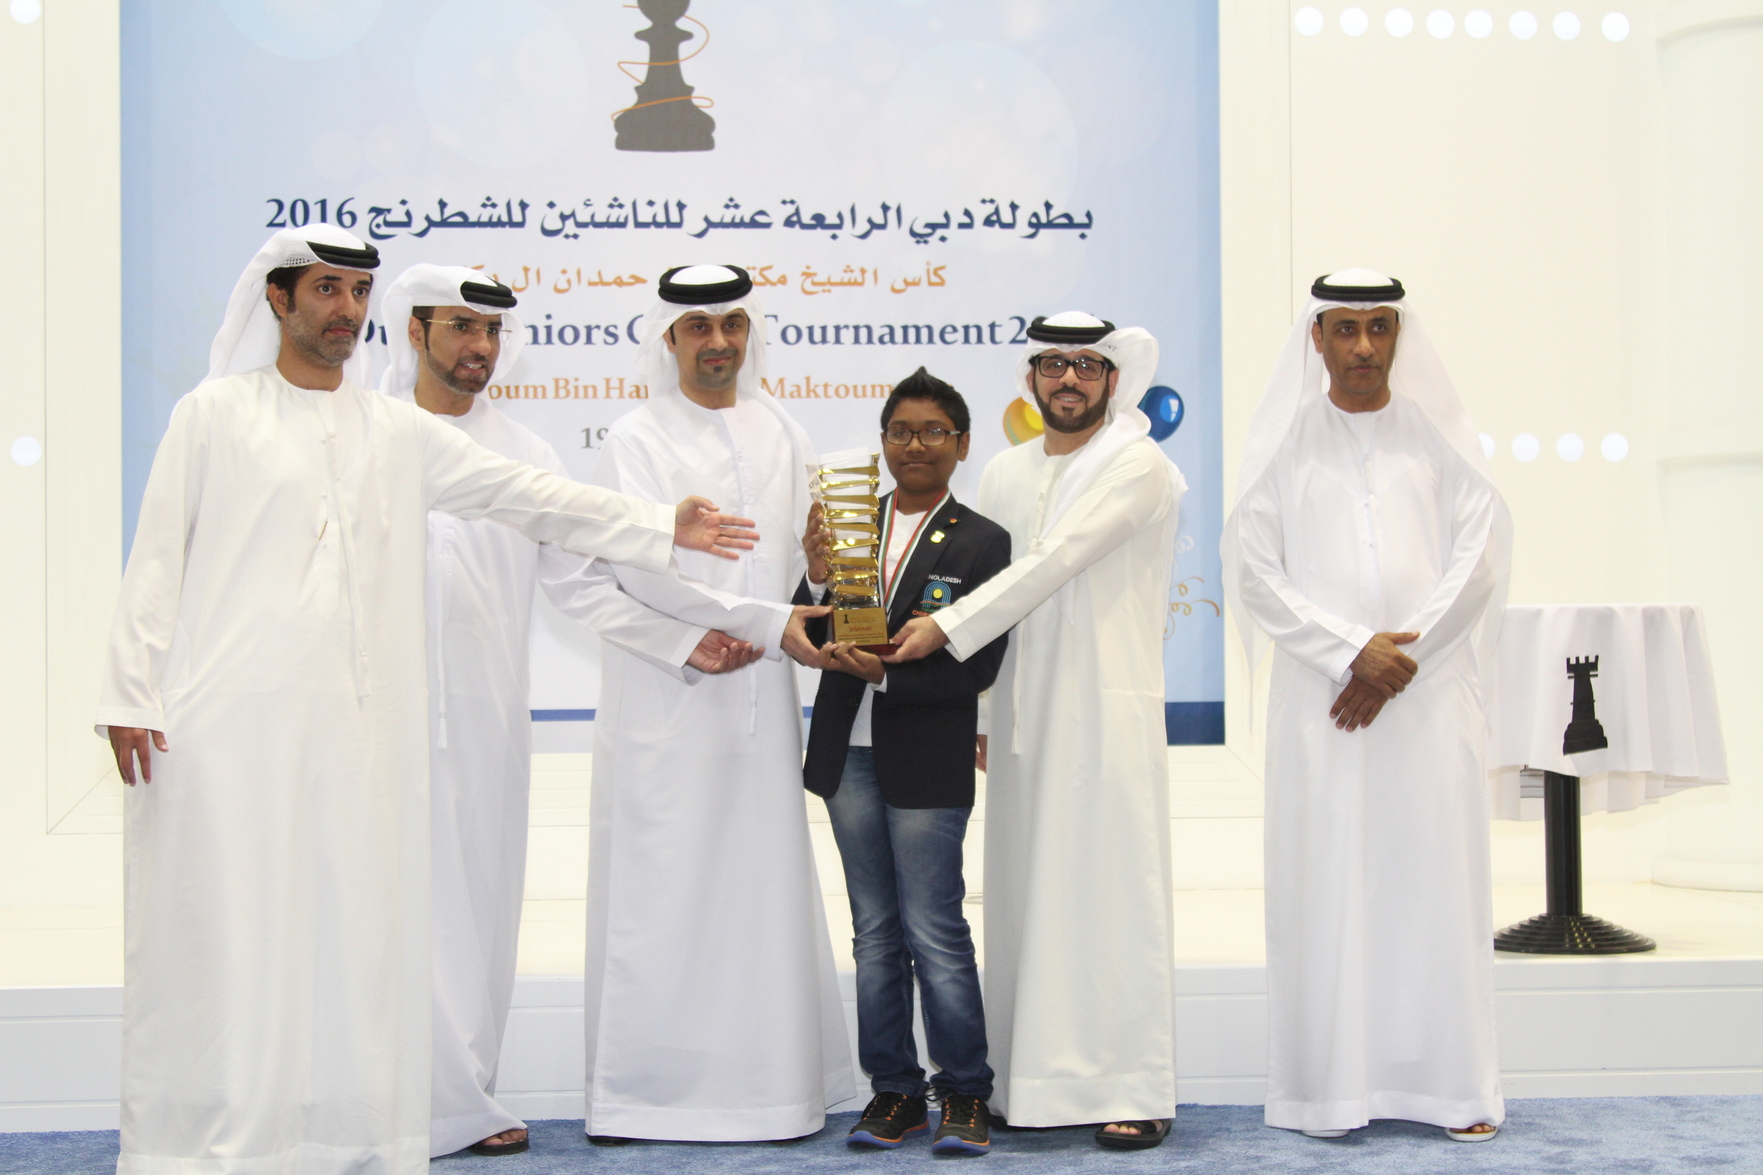 FM Mohammad Rahman receives the Sheikh Maktoum Bin Hamdan Al Maktoum Cup and the US$2,000 champion’s prize